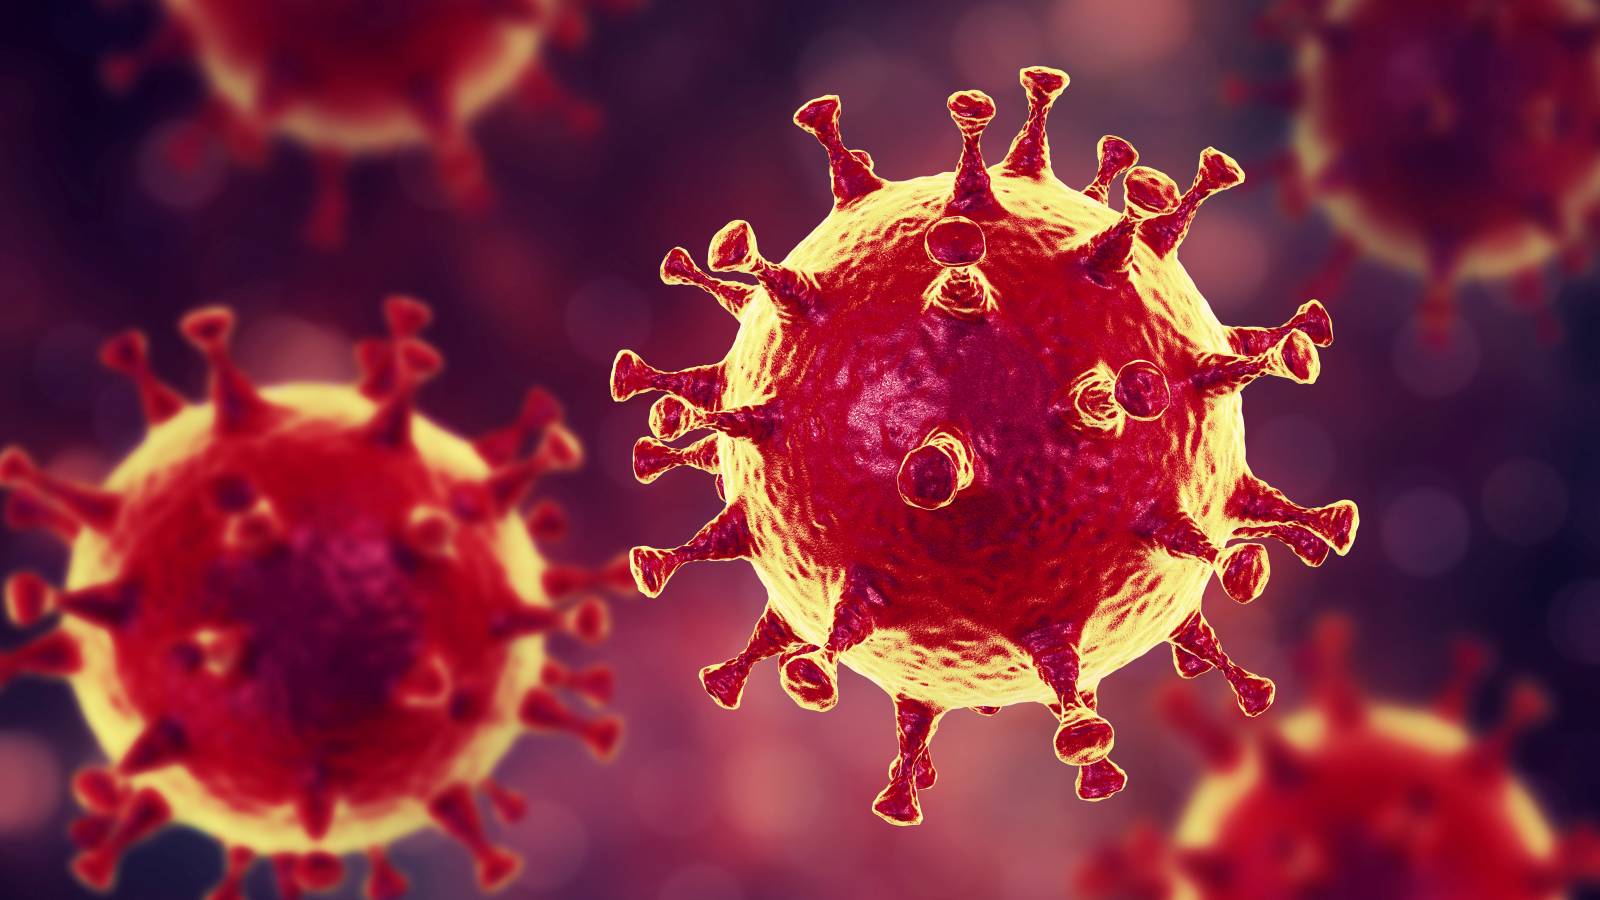 600.000 XNUMX doser av coronavirusvaccinet i januari